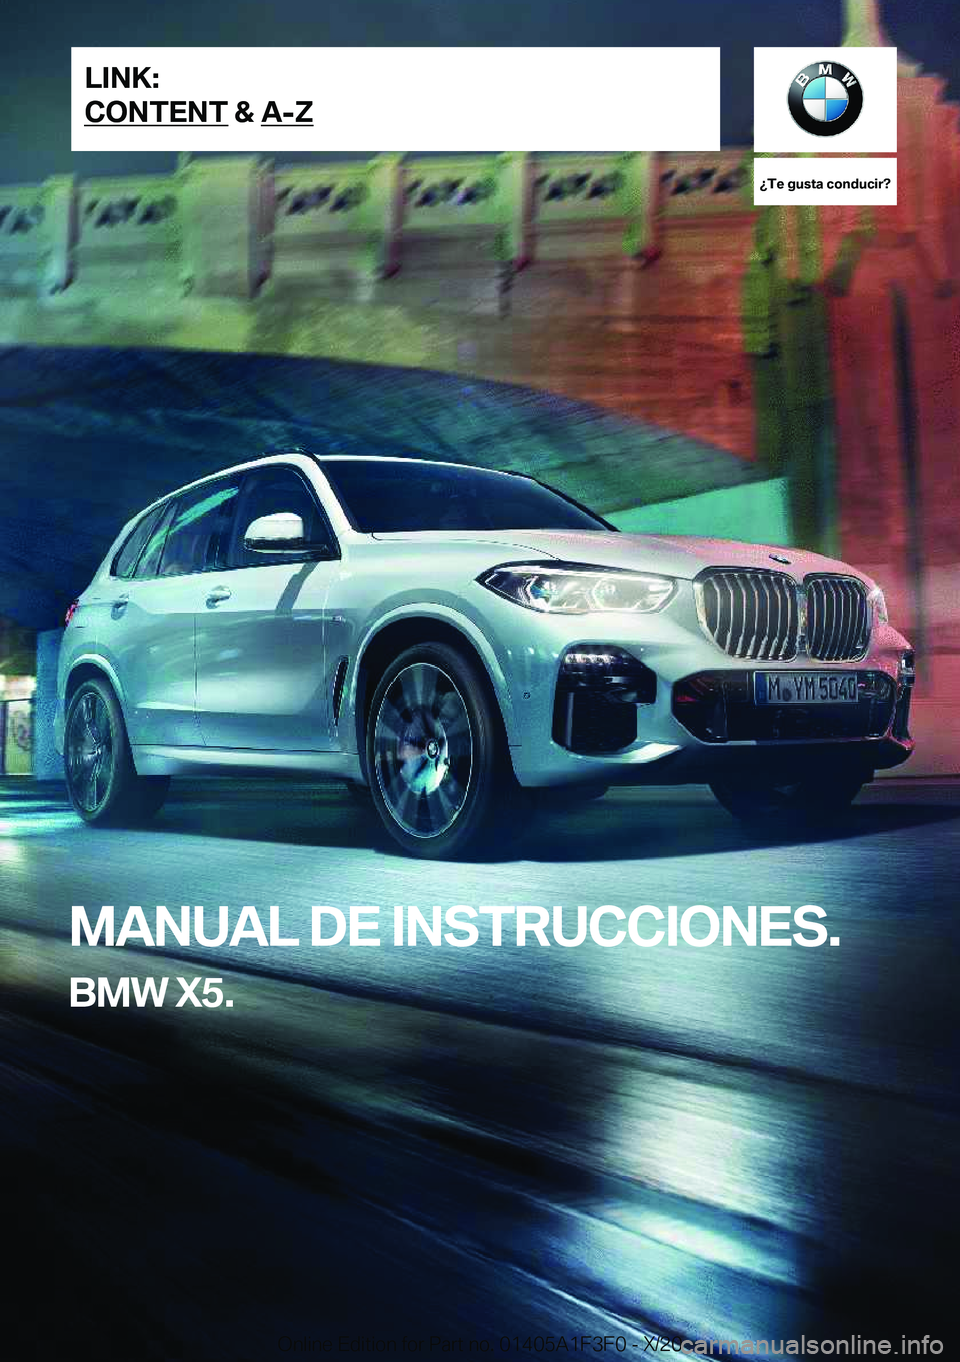 BMW X5 2021  Manuales de Empleo (in Spanish) ��T�e��g�u�s�t�a��c�o�n�d�u�c�i�r� 
�M�A�N�U�A�L��D�E��I�N�S�T�R�U�C�C�I�O�N�E�S�.
�B�M�W��X�5�.�L�I�N�K�:
�C�O�N�T�E�N�T��&��A�-�Z�O�n�l�i�n�e��E�d�i�t�i�o�n��f�o�r��P�a�r�t��n�o�.��0�1�